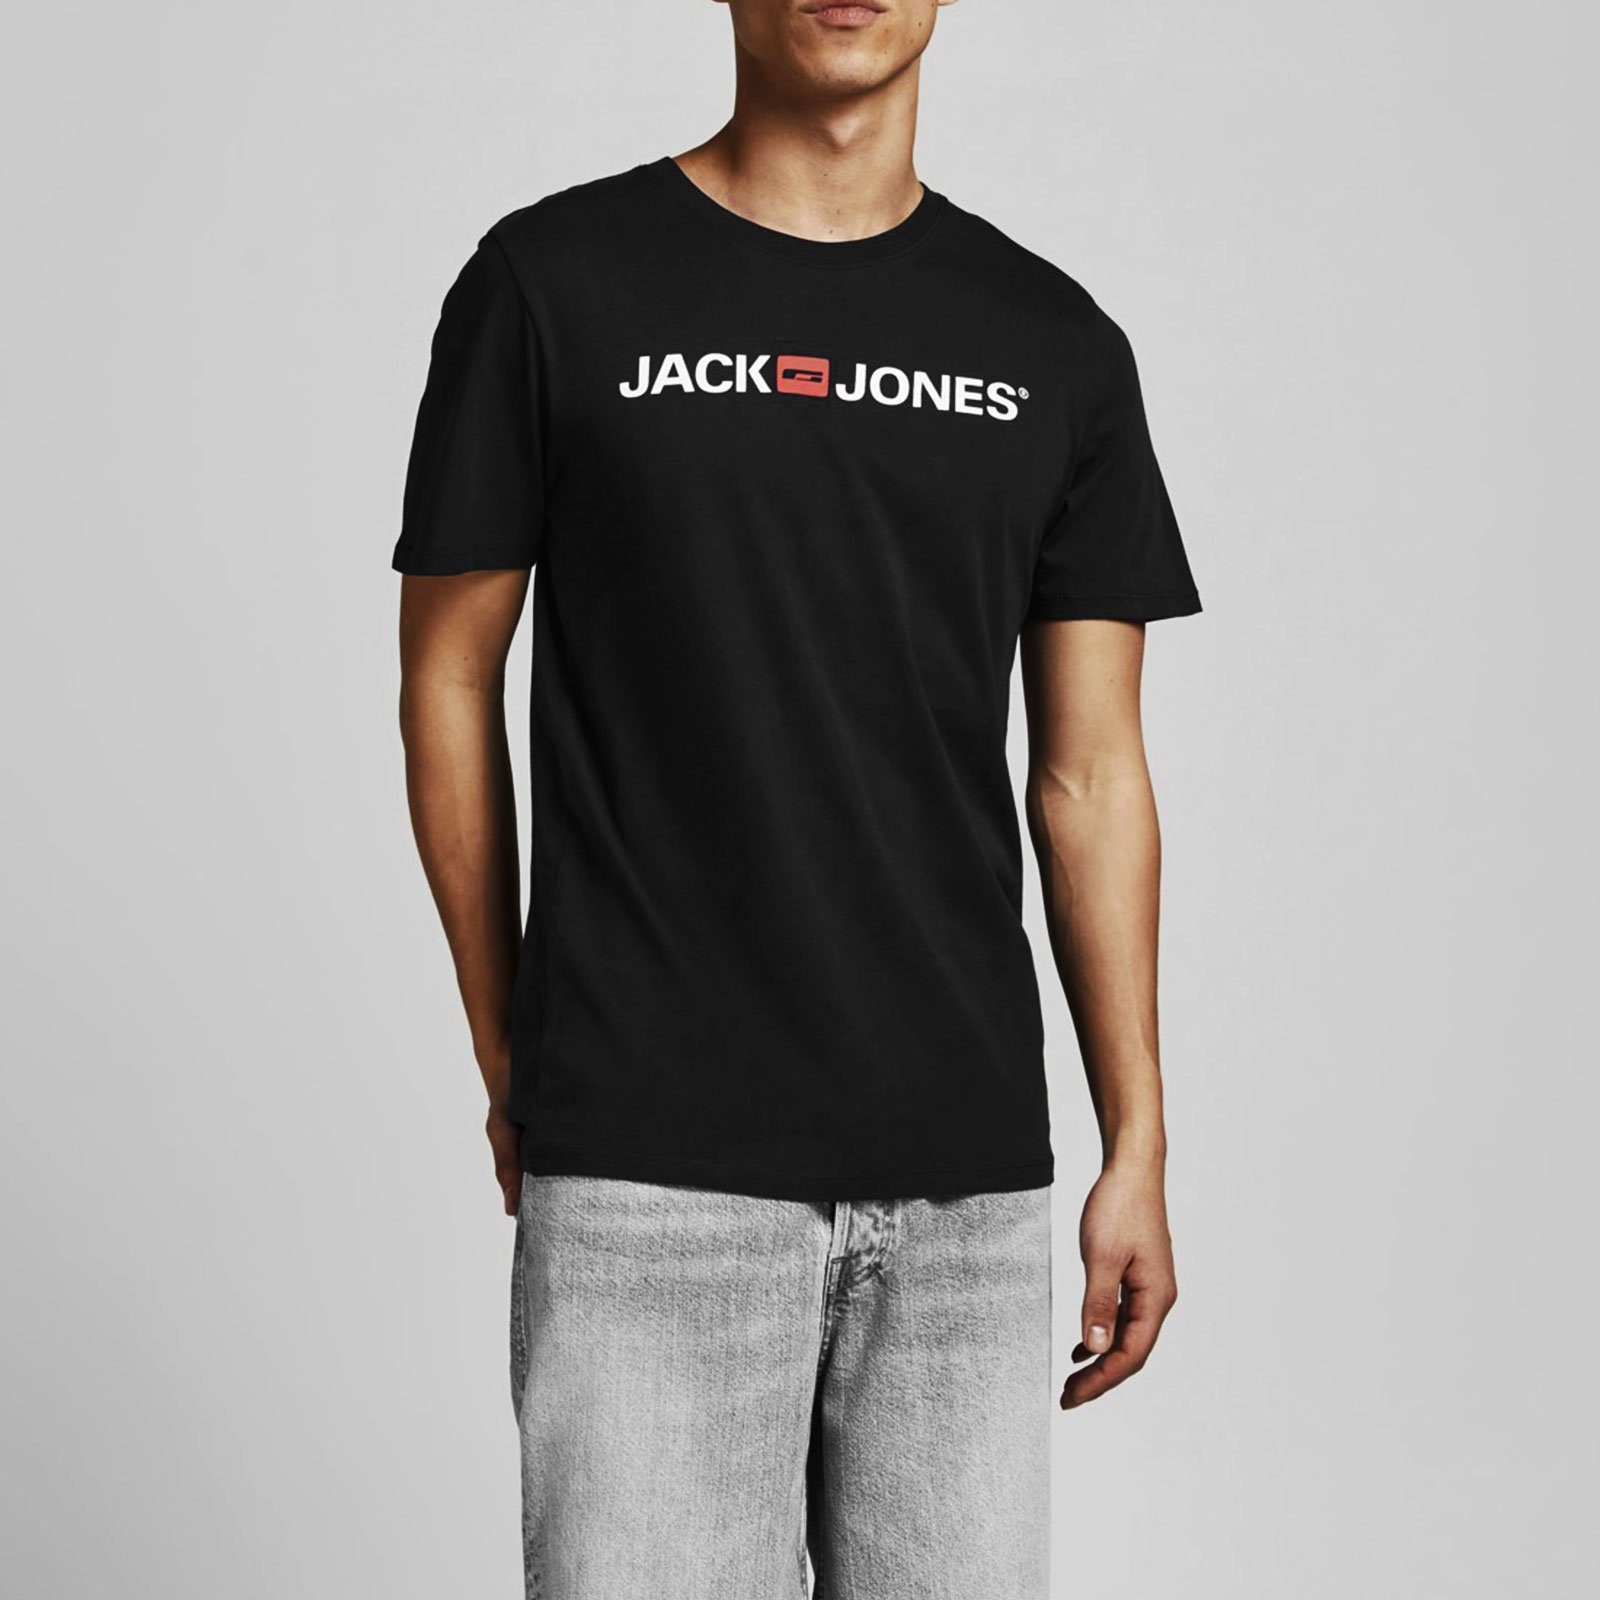 Neck mit Pack Logo Jack black Markenschriftzug 2er Crew Jones Tee & / T-Shirt black